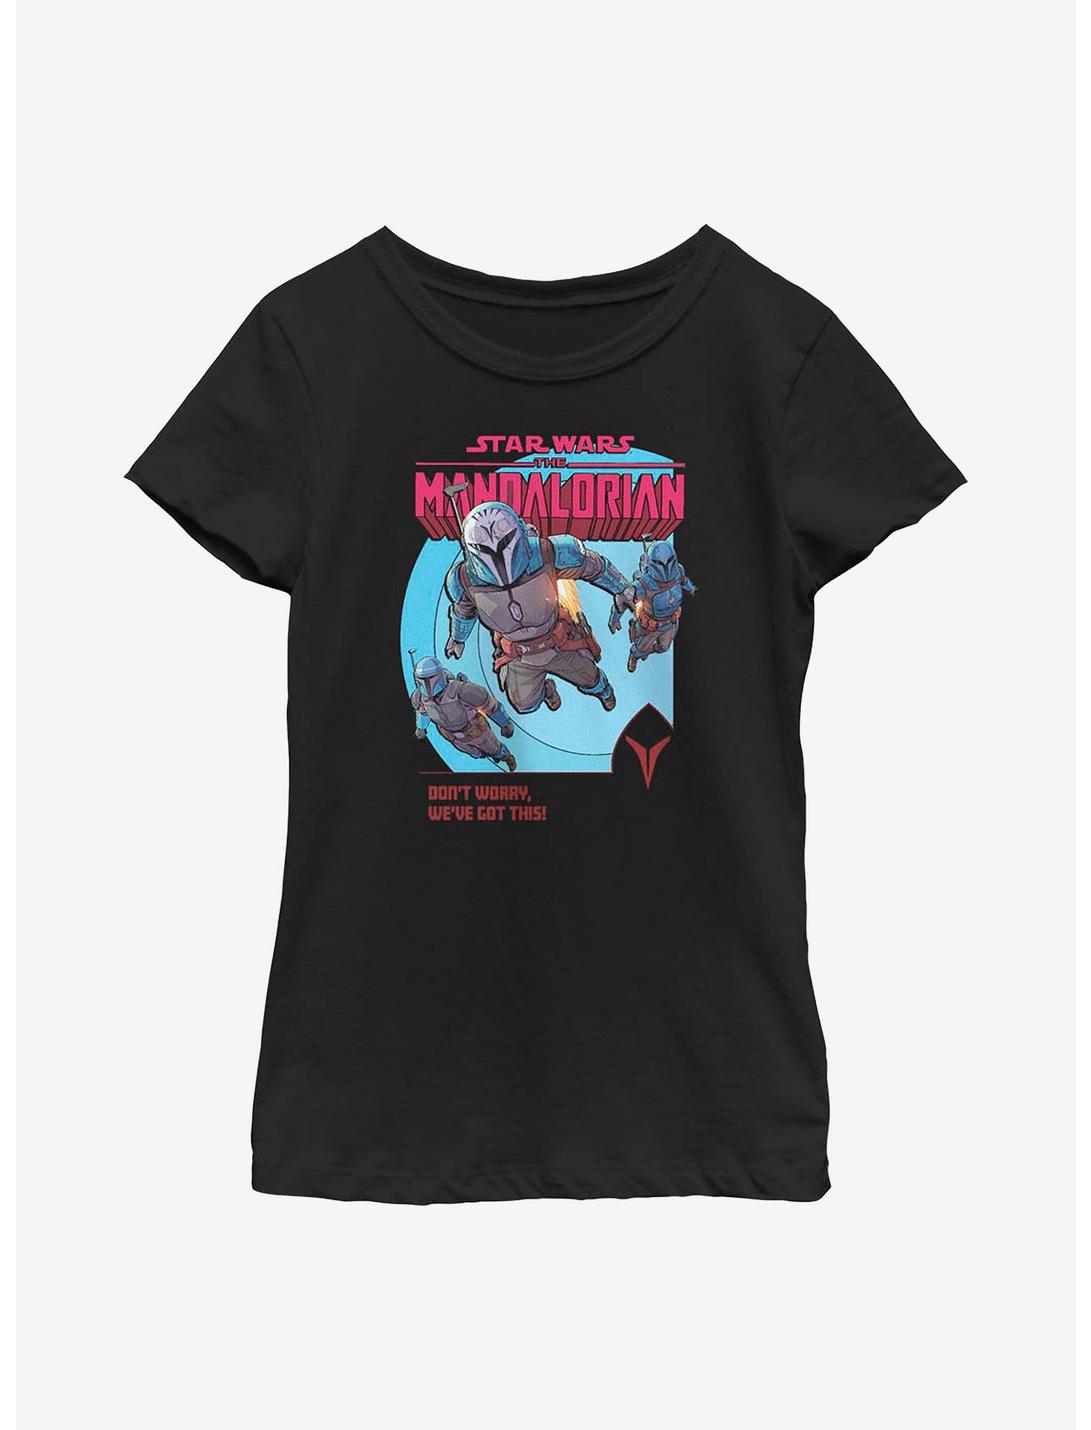 Star Wars The Mandalorian We've Got This Youth Girls T-Shirt, BLACK, hi-res